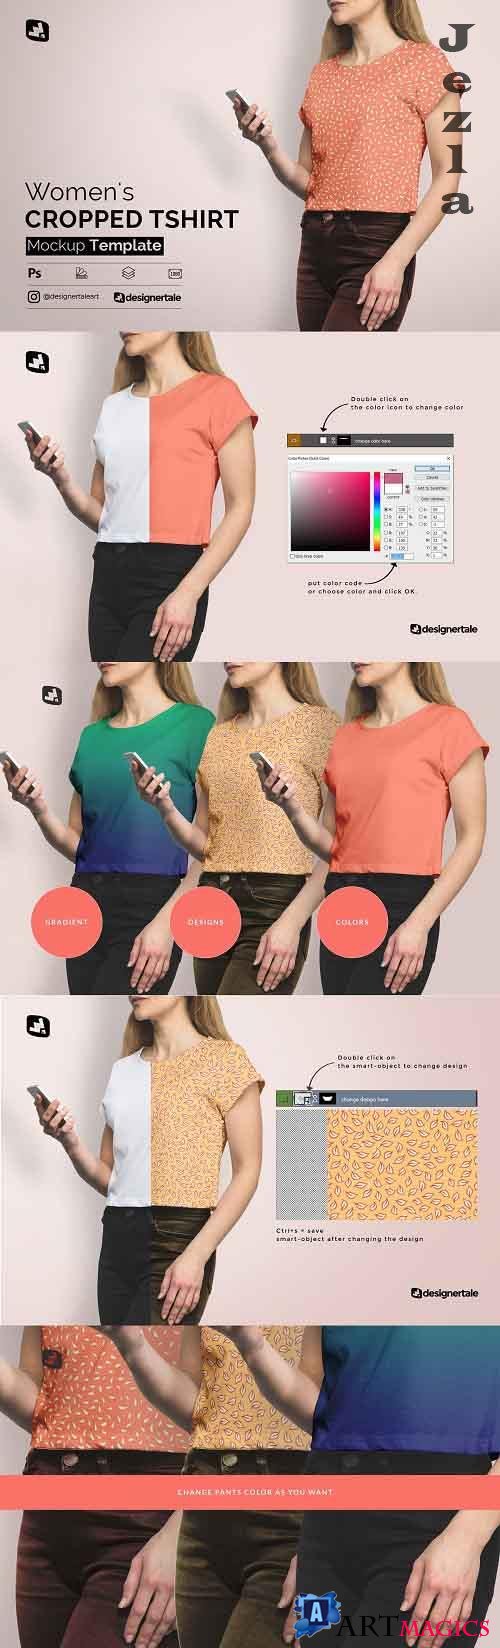 CreativeMarket - Women's Cropped Tshirt Mockup 4728864